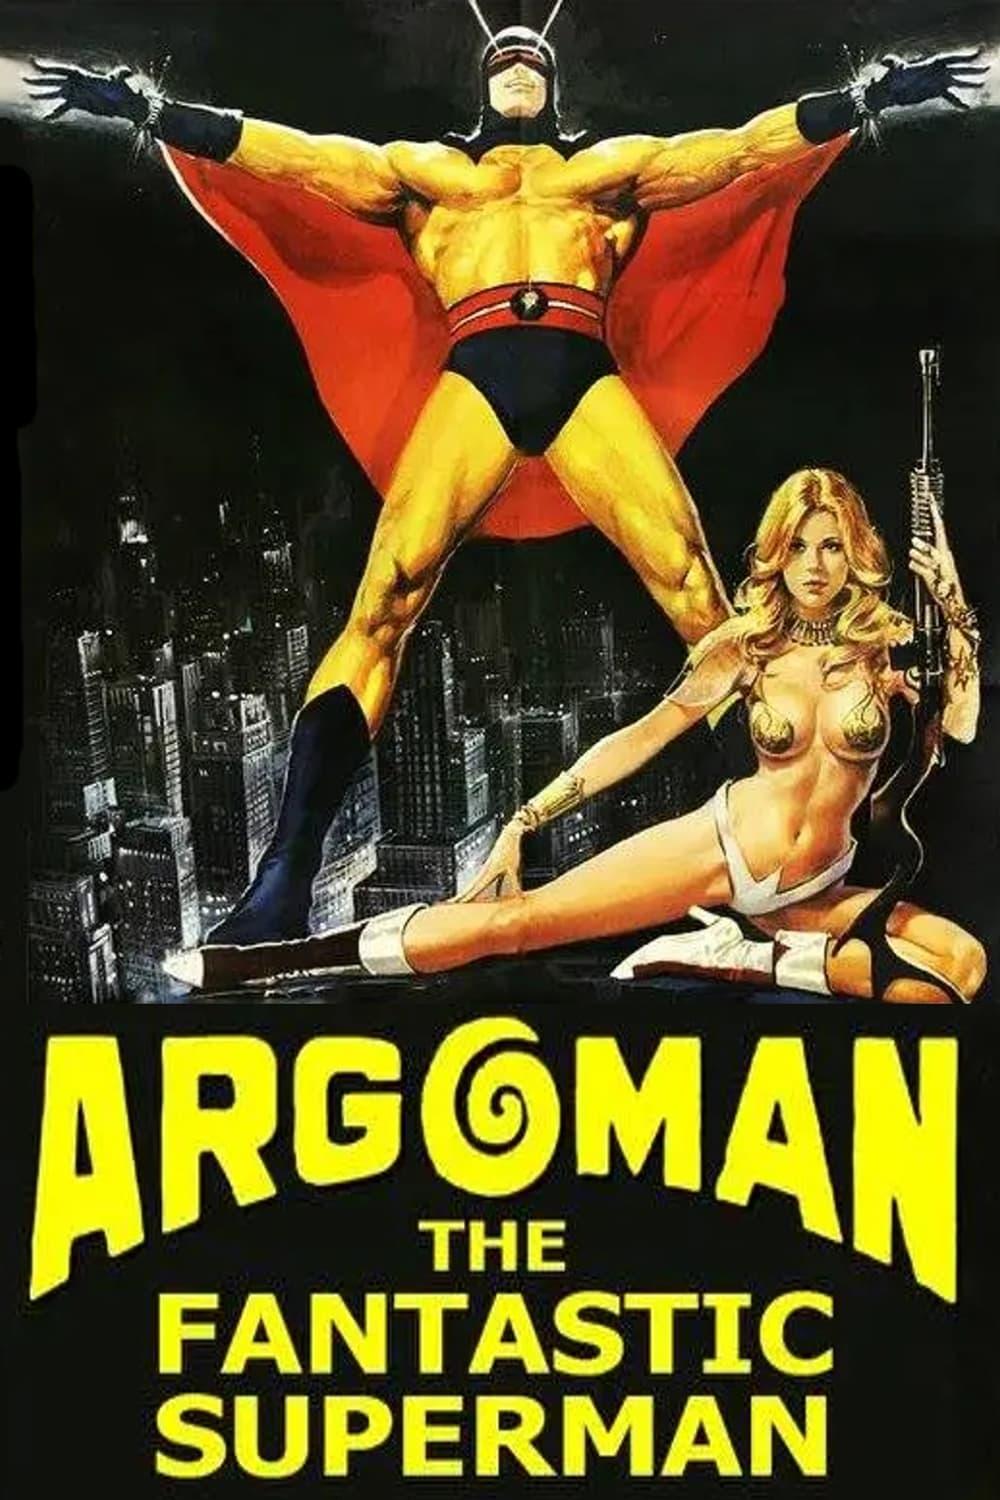 Argoman the Fantastic Superman poster